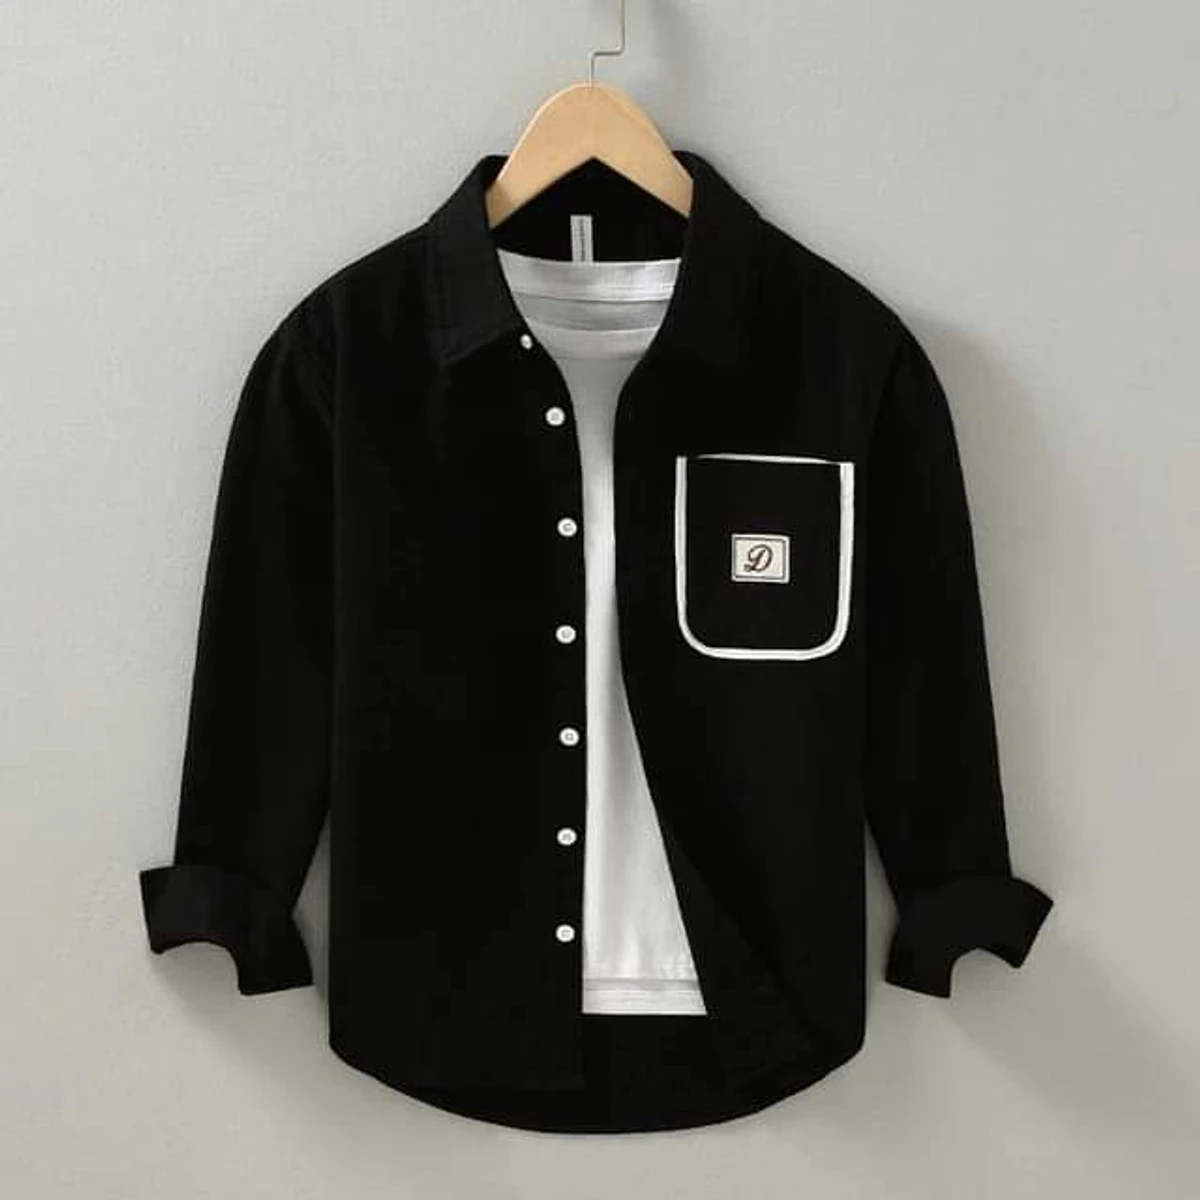 Cotton Rolex Full Sleeve Casual Shirt For Men Black-M002